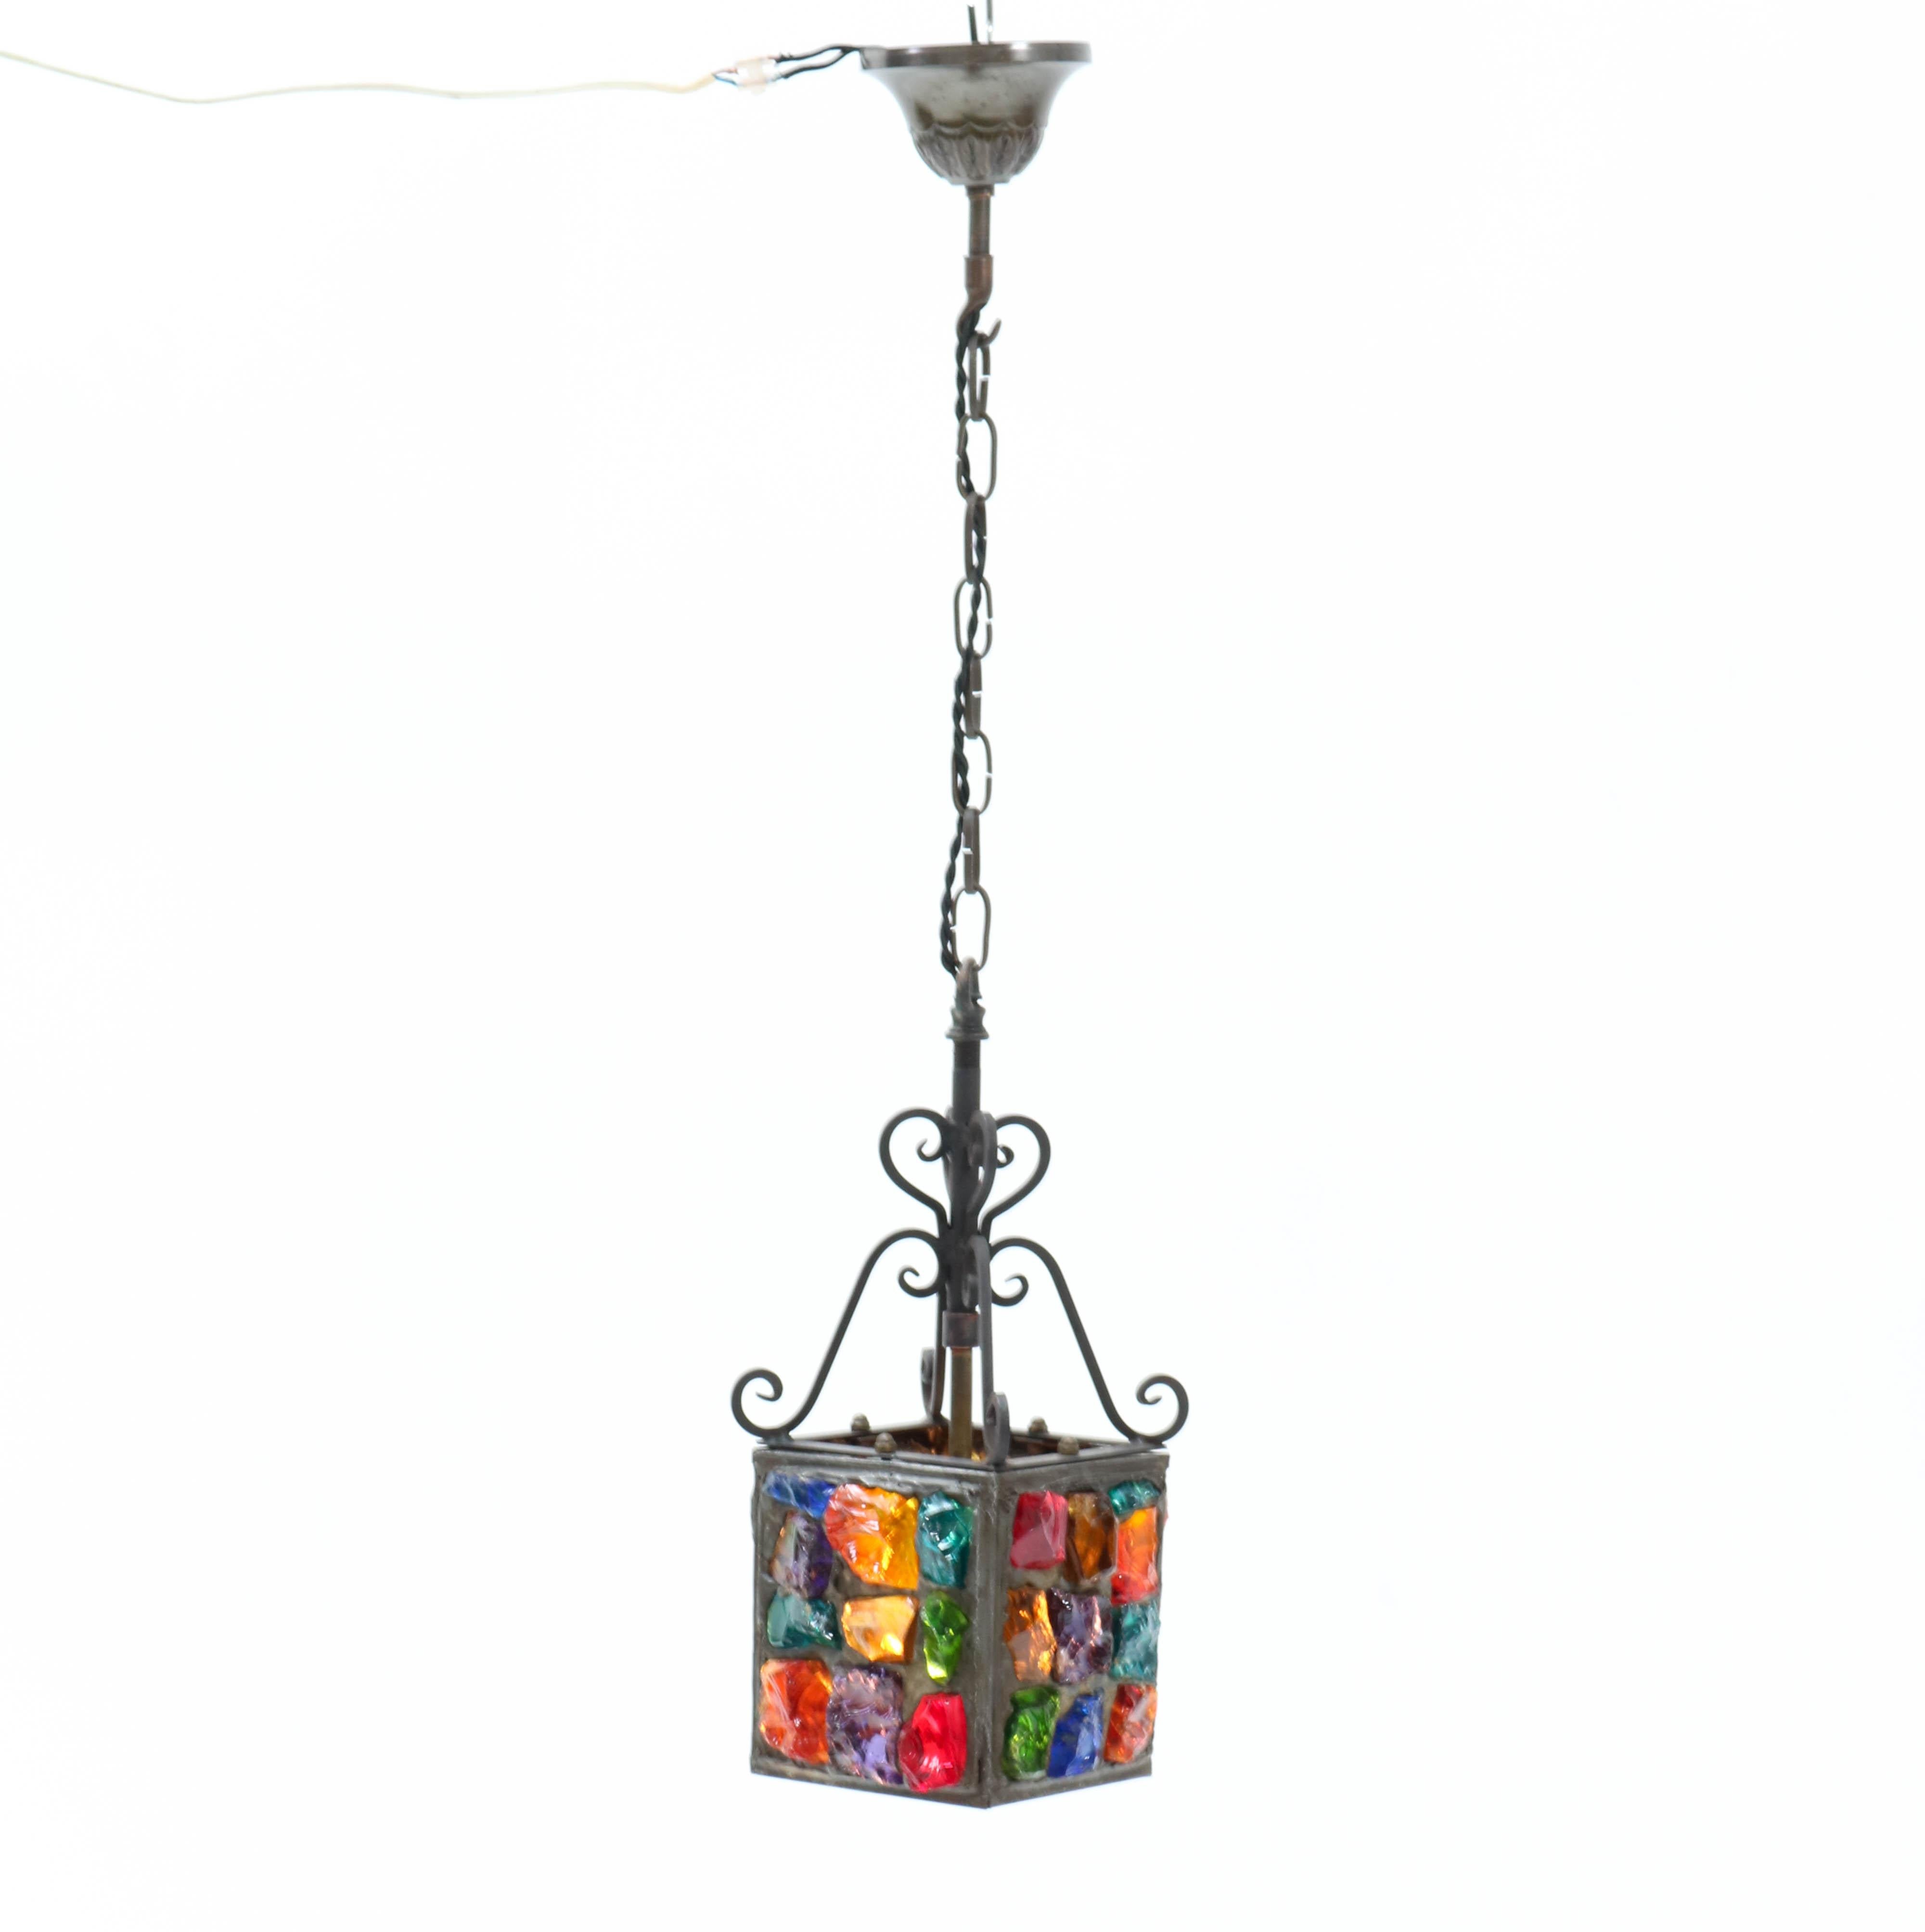 British Arts & Crafts Art Nouveau Wrought Iron Lantern, 1900s For Sale